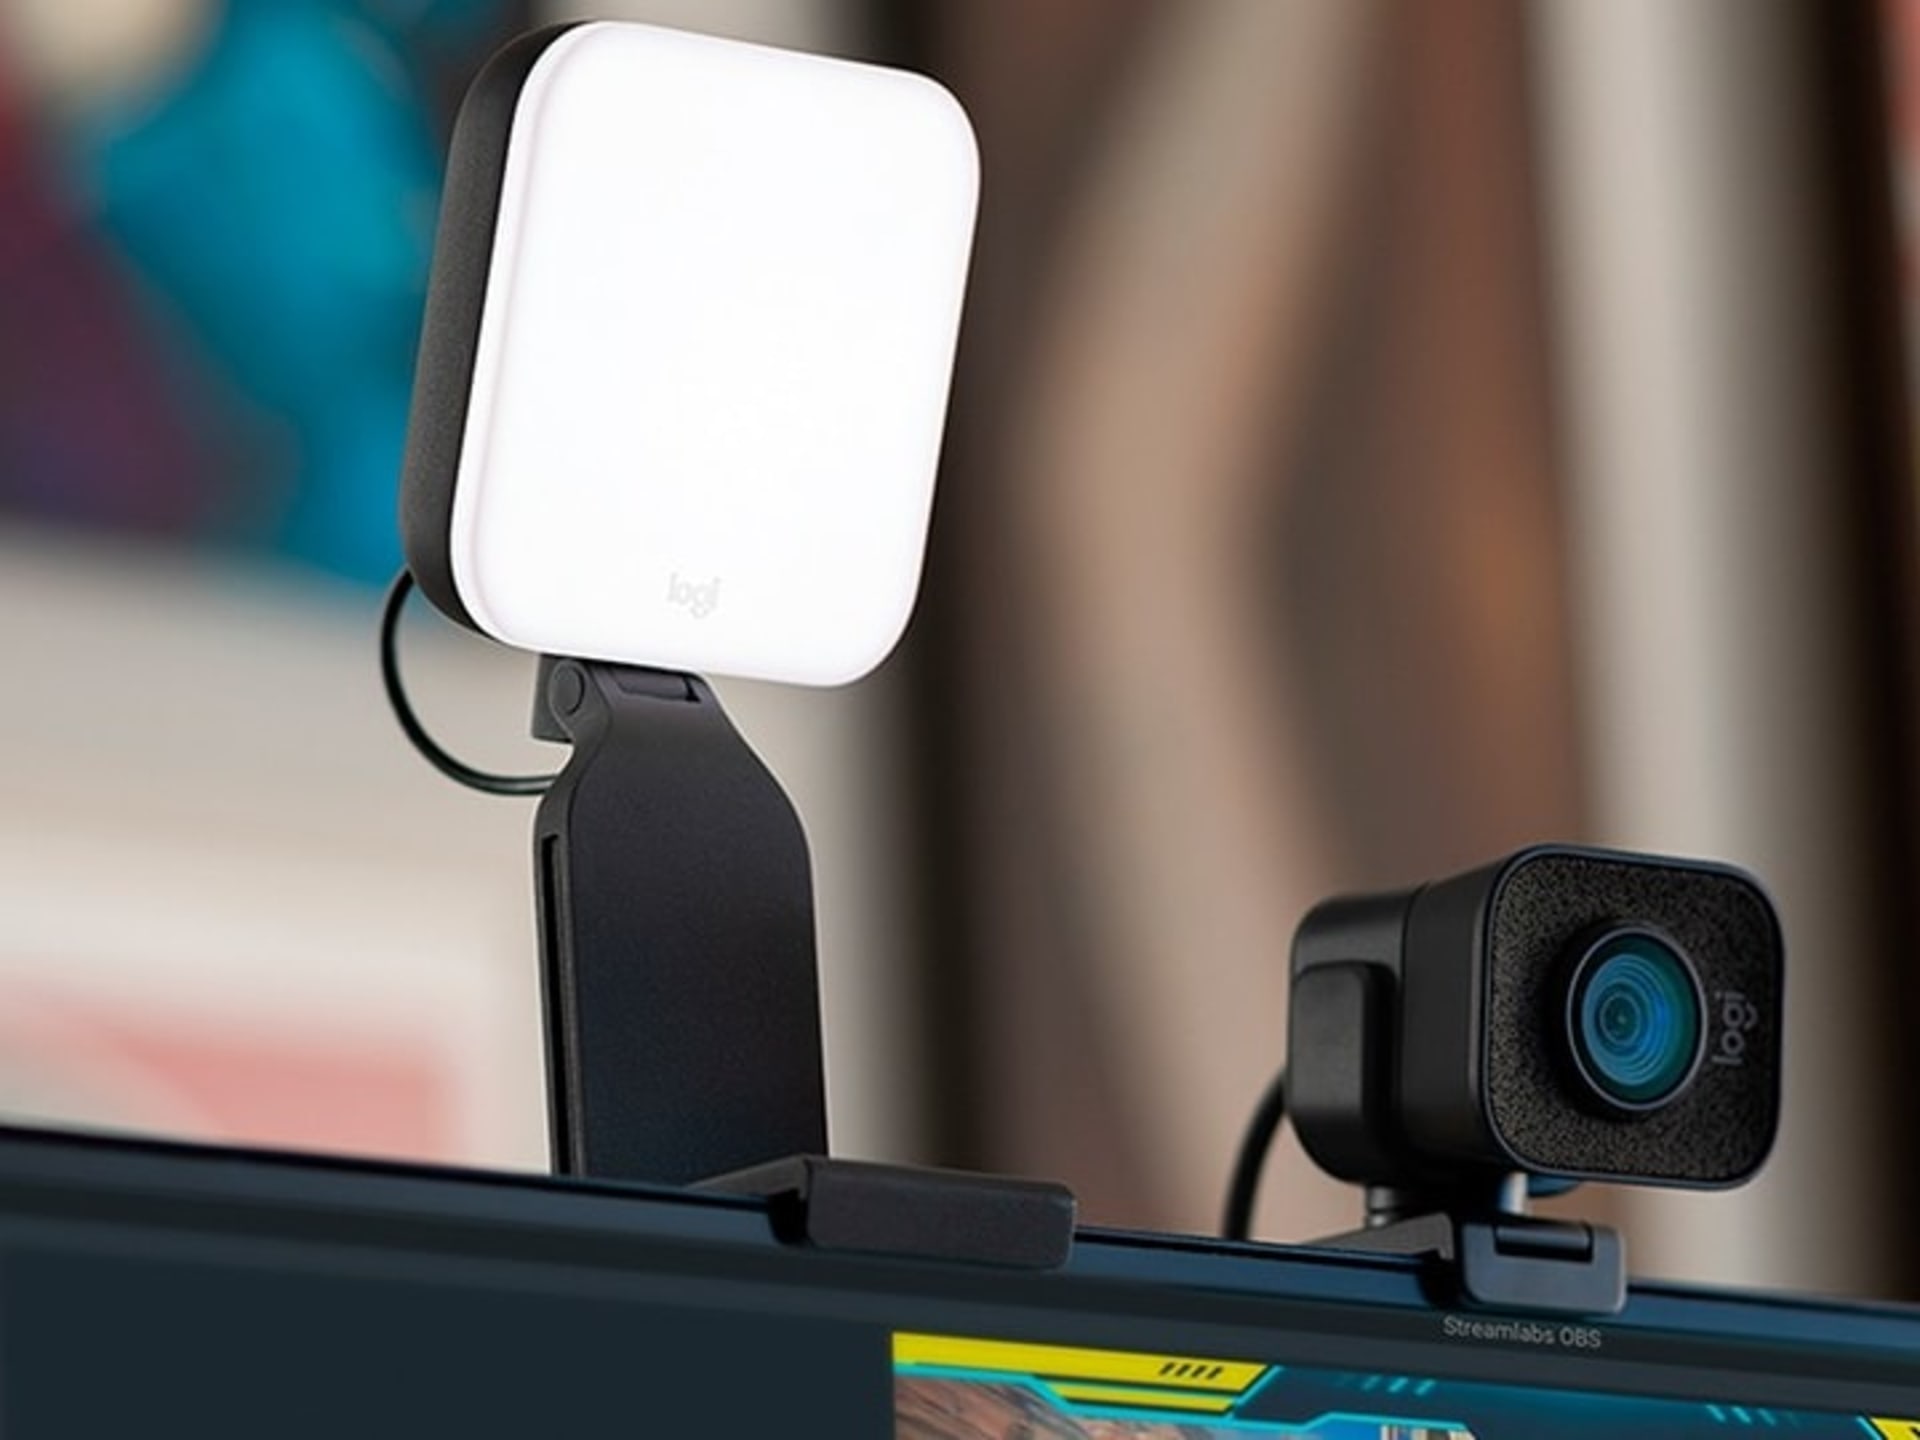 Logitech 4K Pro Webcam with Litra Glow Premium Streaming Light